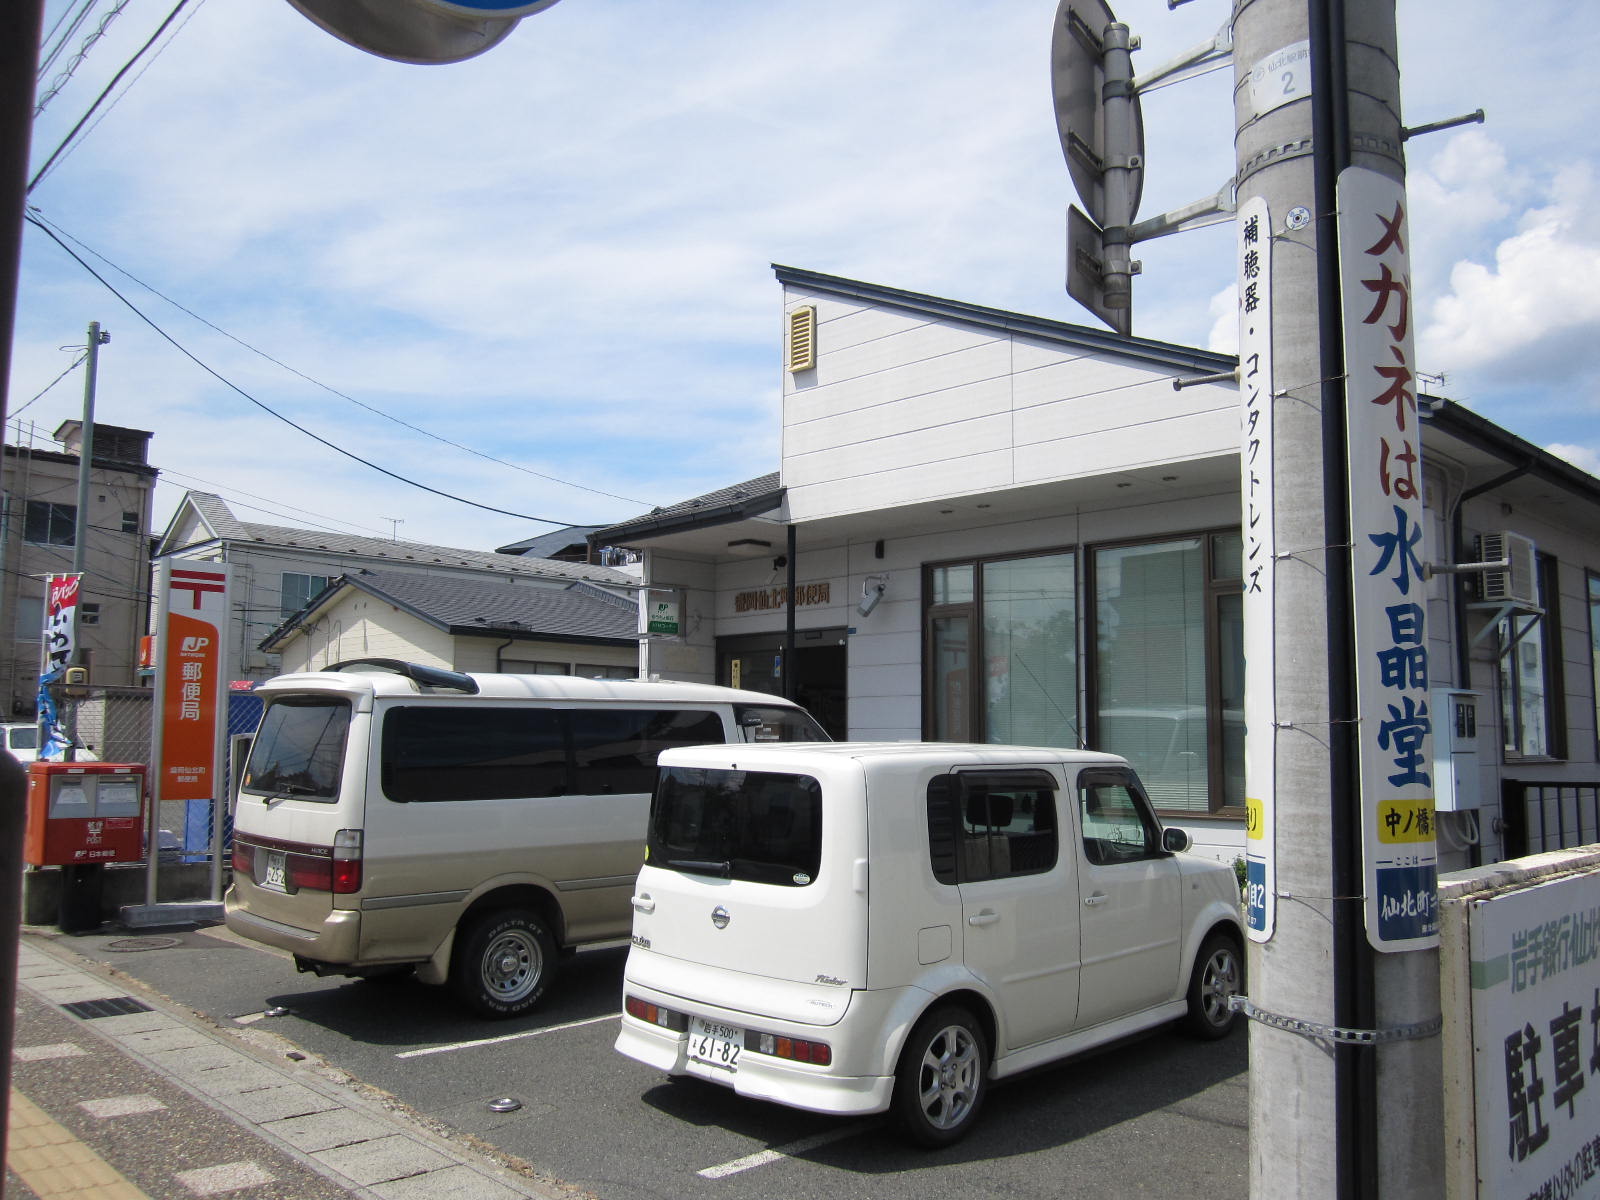 post office. 1529m to Morioka Senbokucho post office (post office)